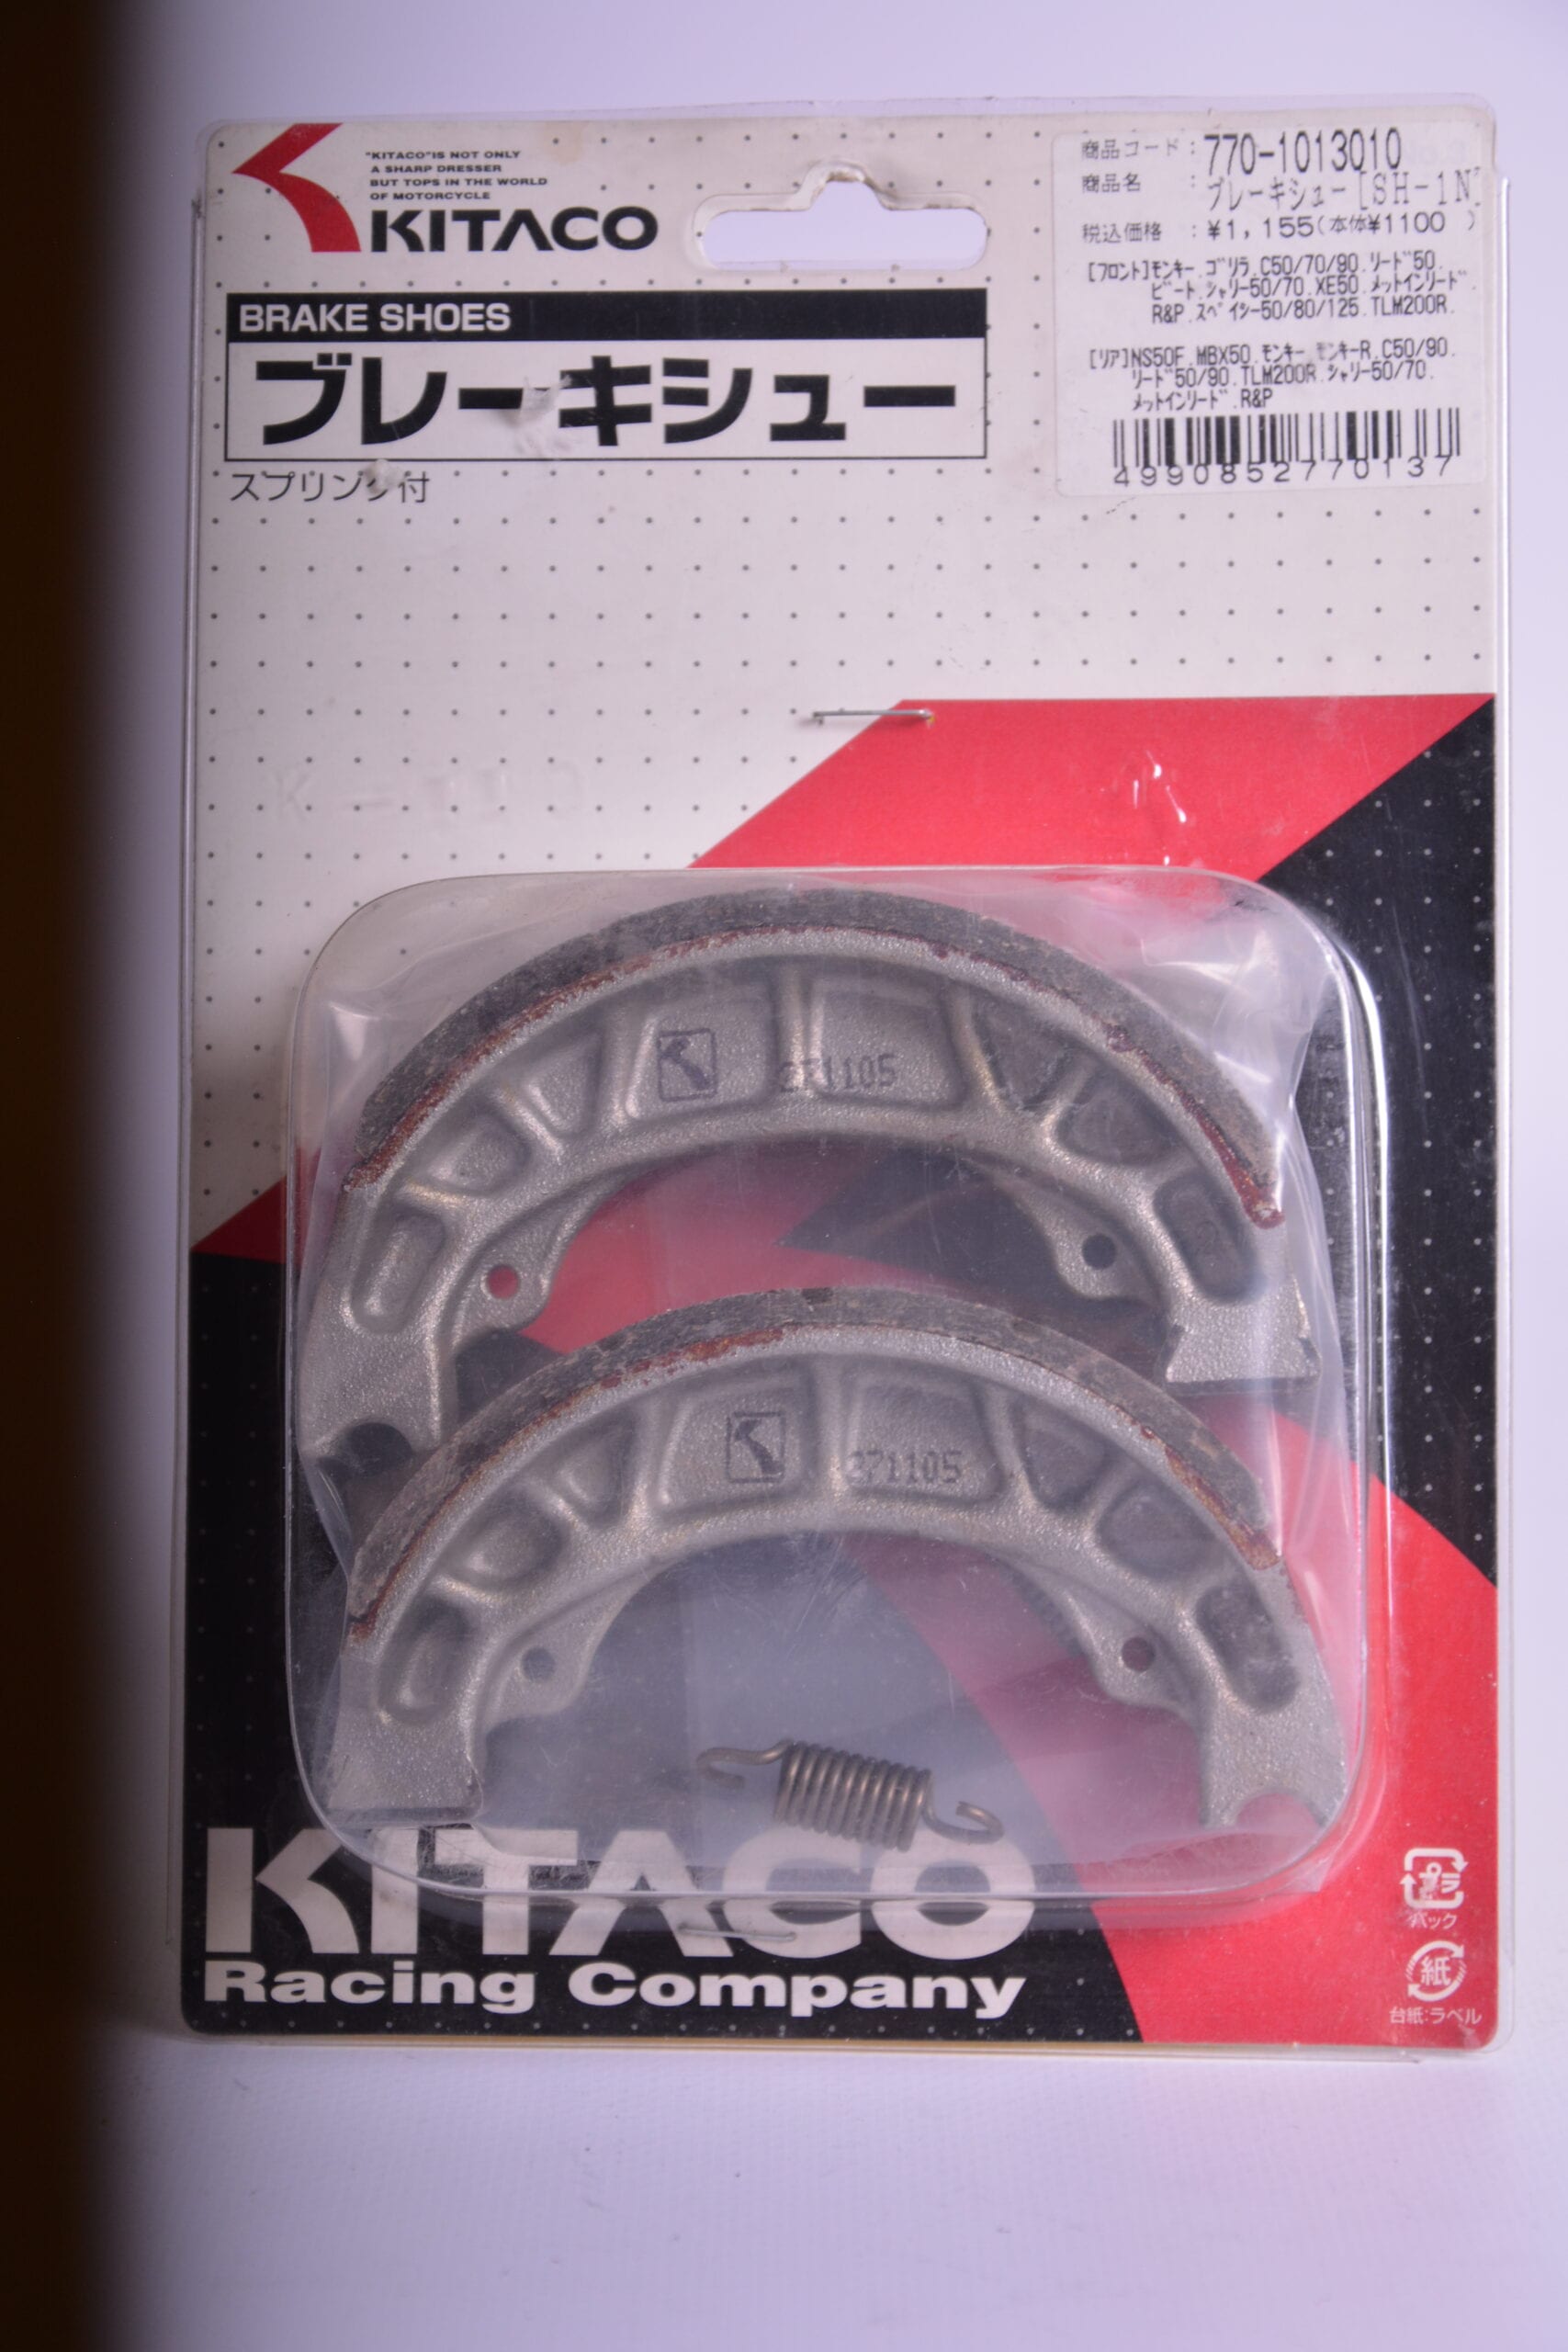 770-101-3010 Kitaco brake shoe